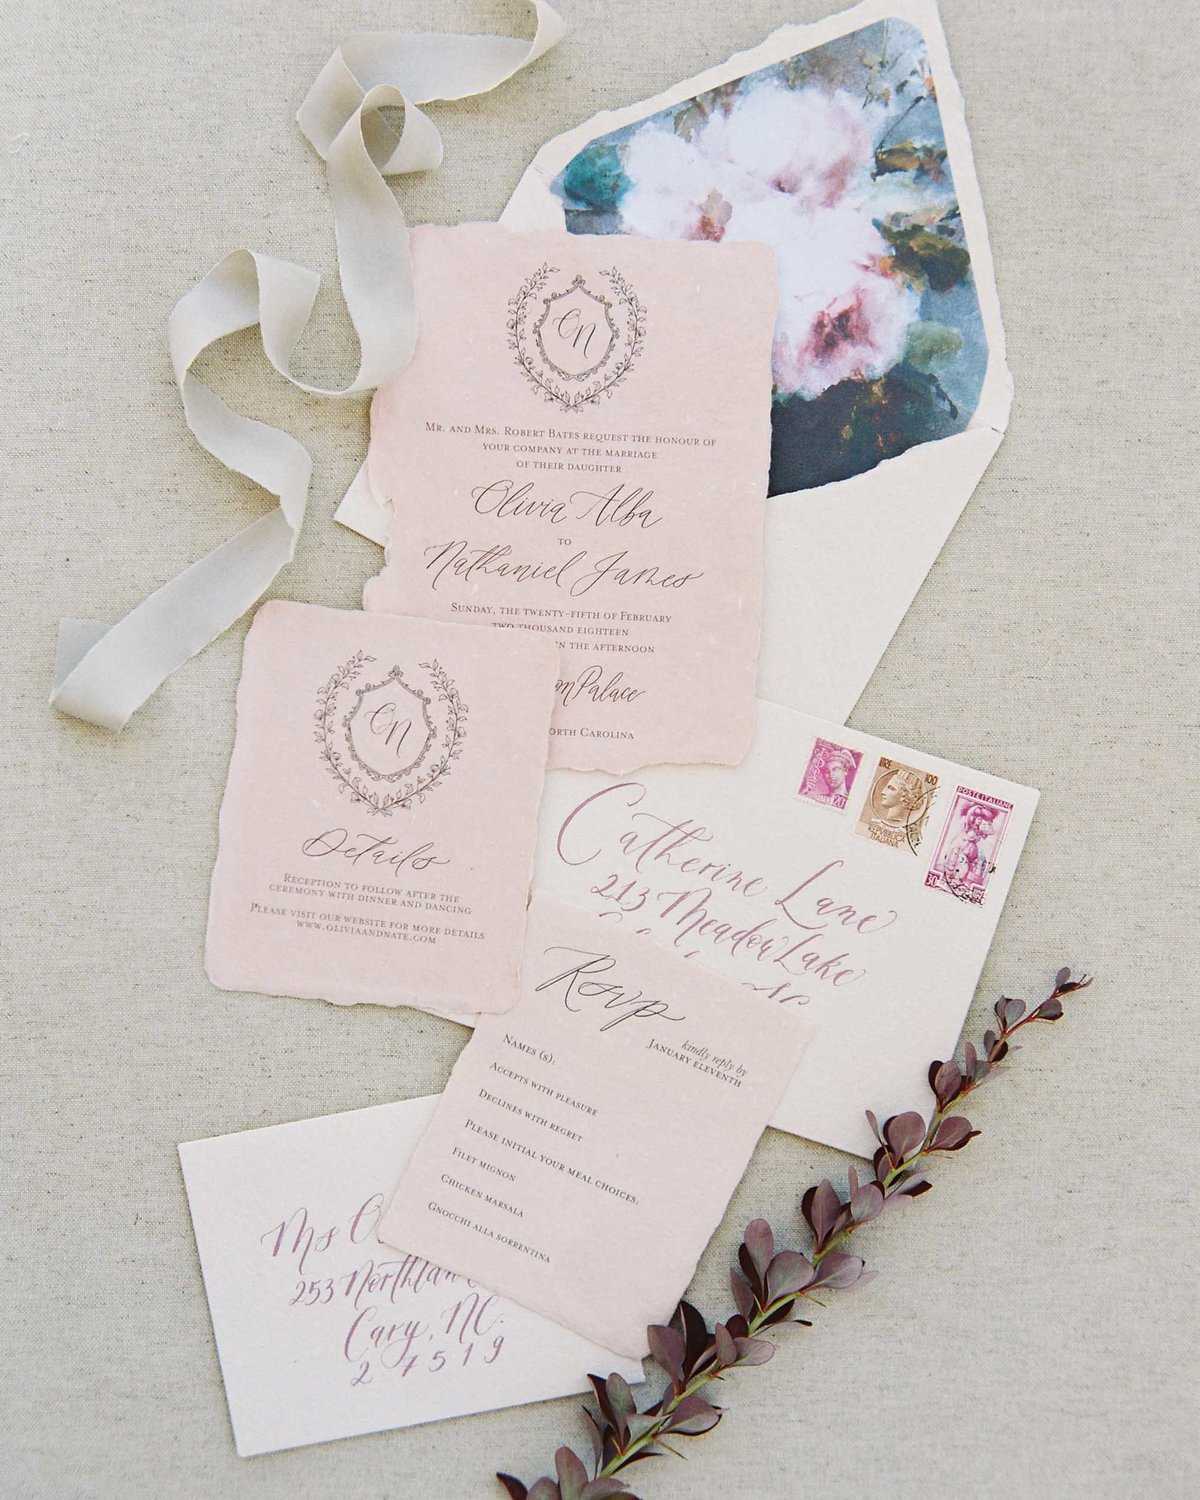 Plume & Fete timeless romantic invitation suite on blush handmade paper